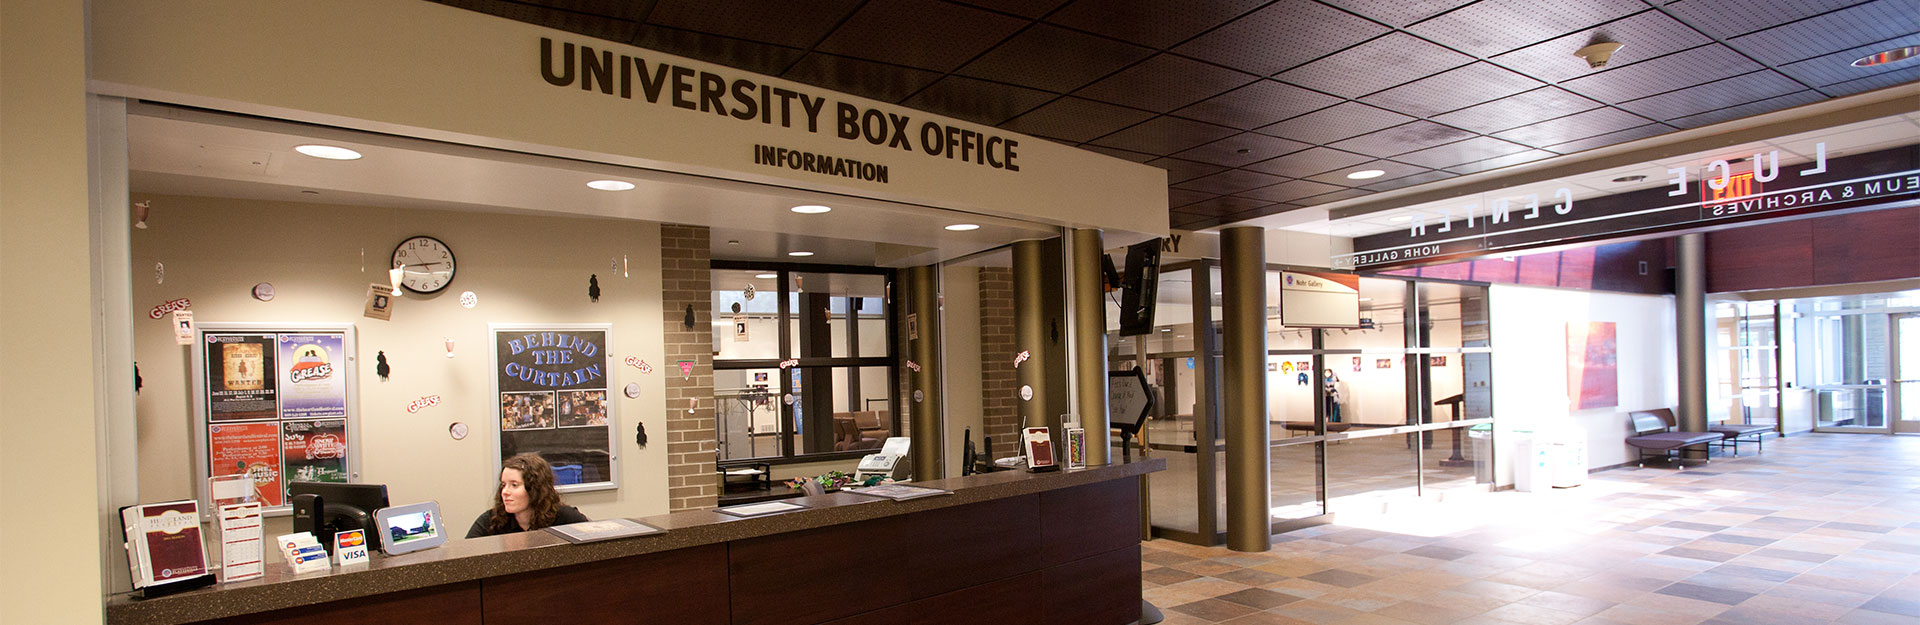 University Box Office